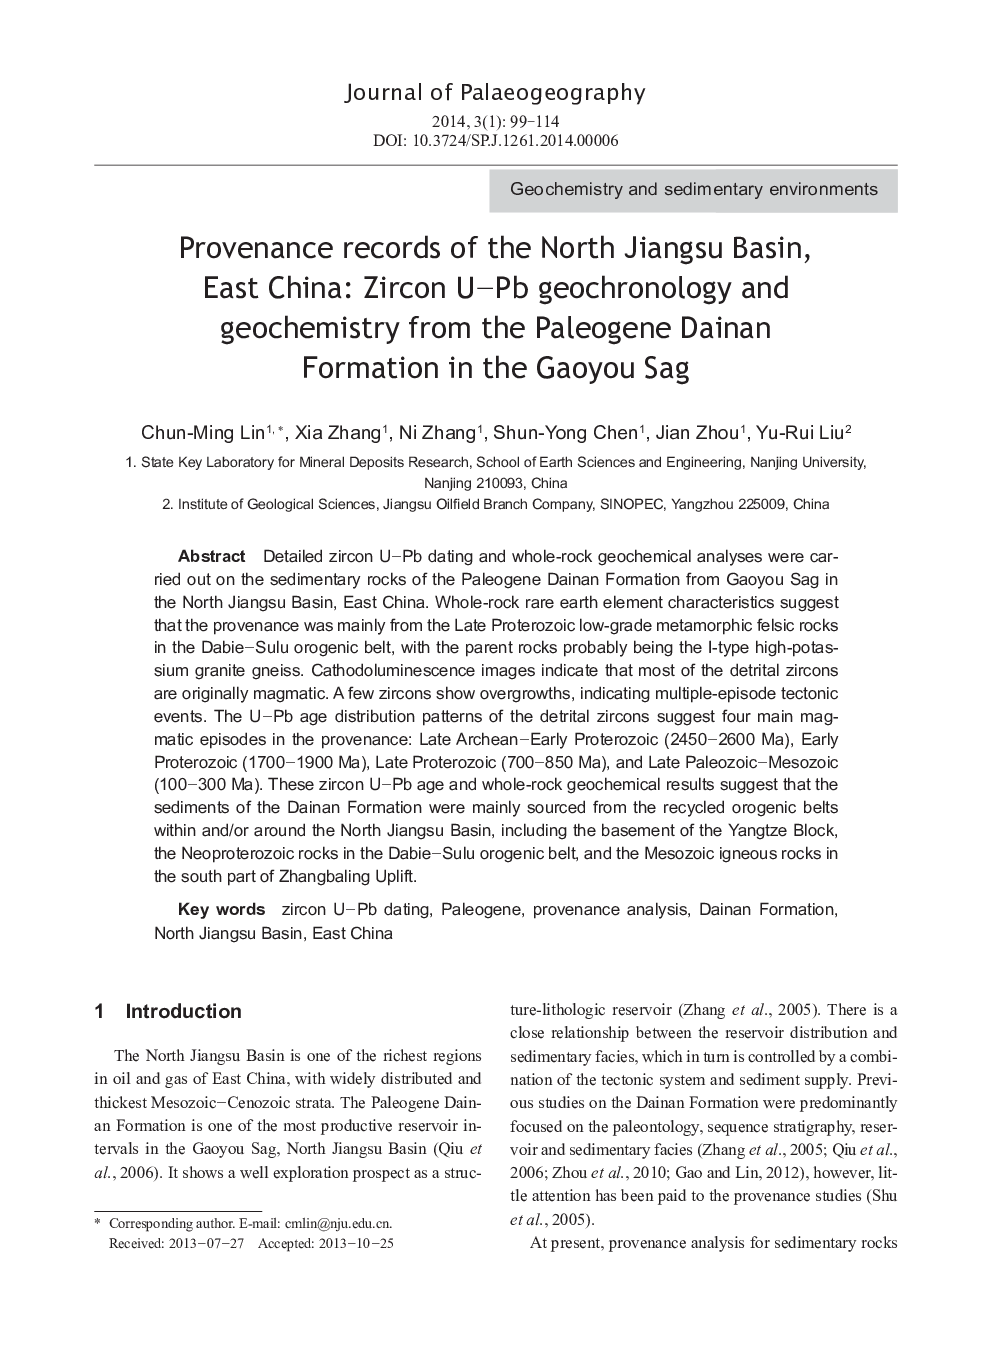 Provenance records of the North Jiangsu Basin, East China: Zircon U–Pb geochronology and geochemistry from the Paleogene Dainan Formation in the Gaoyou Sag